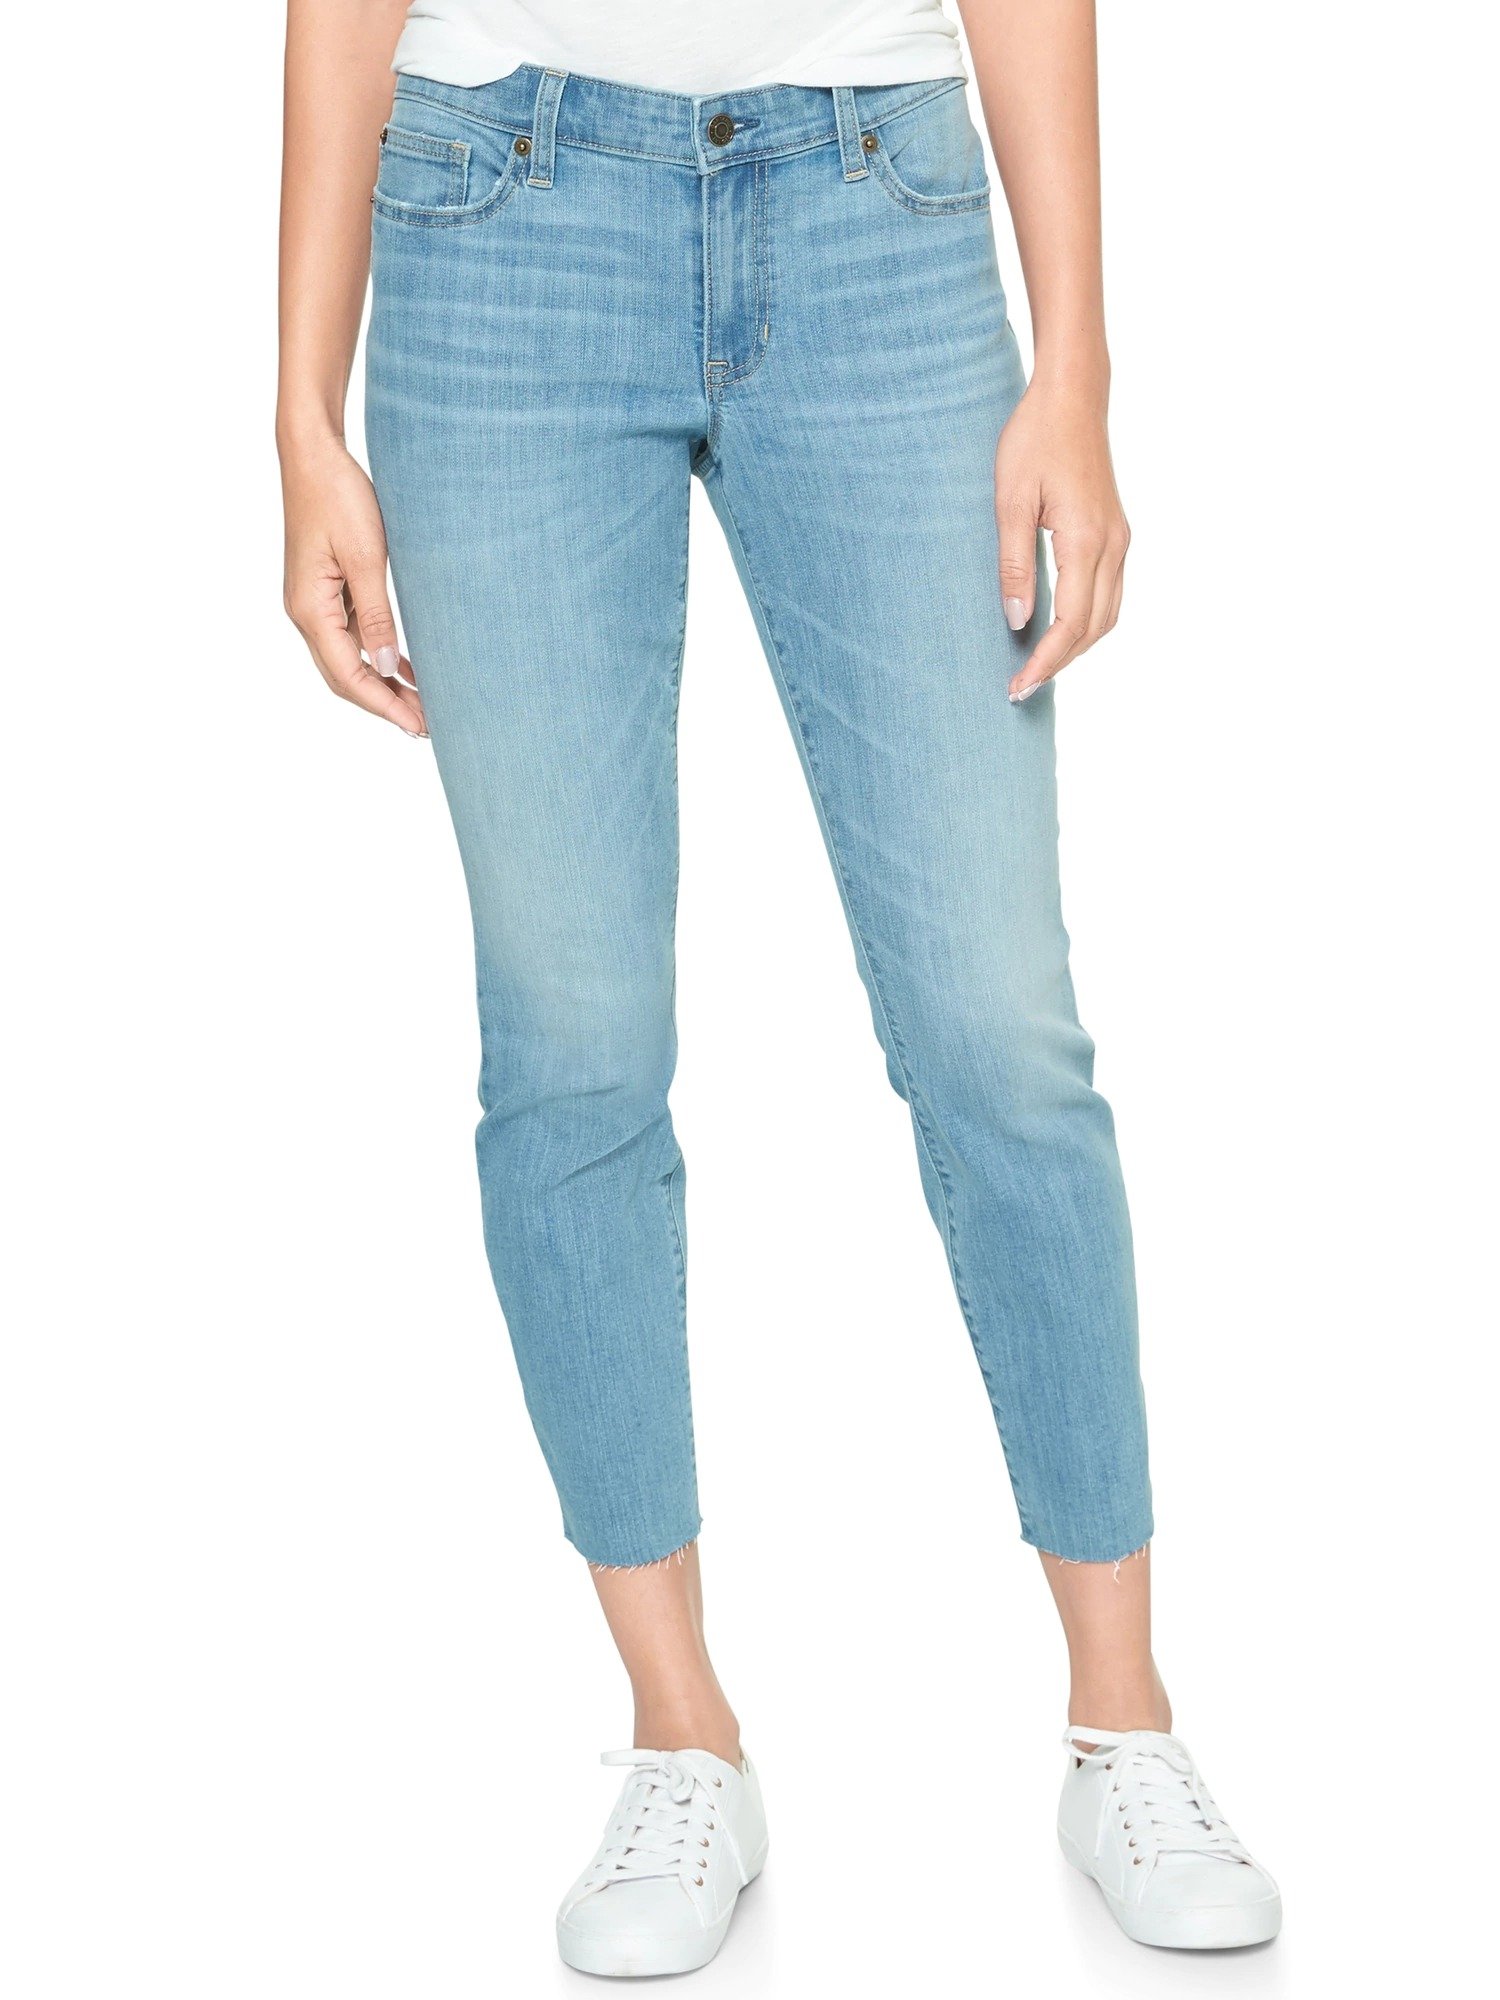 Orta belli jegging jean pantolon product image